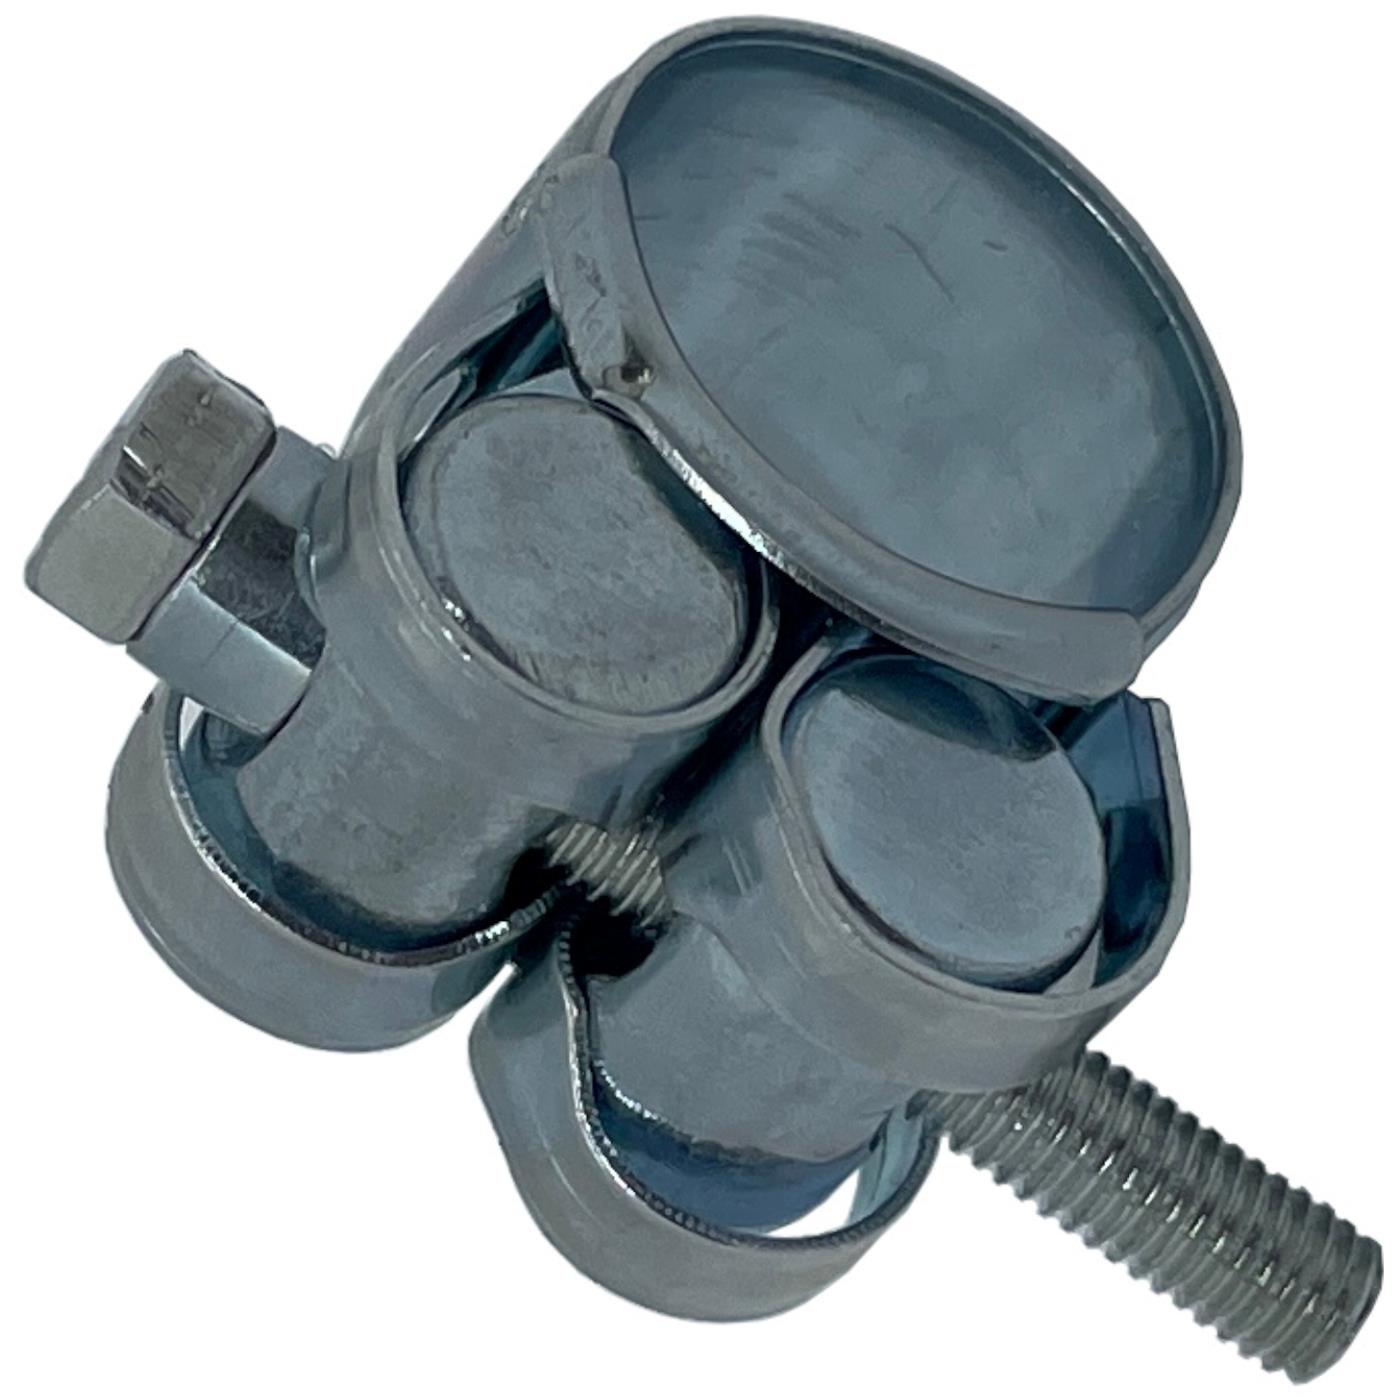 10x Lumonic Hinge pin clamp 17-19mm Galvanised Exhaust clamp for construction cars trucks